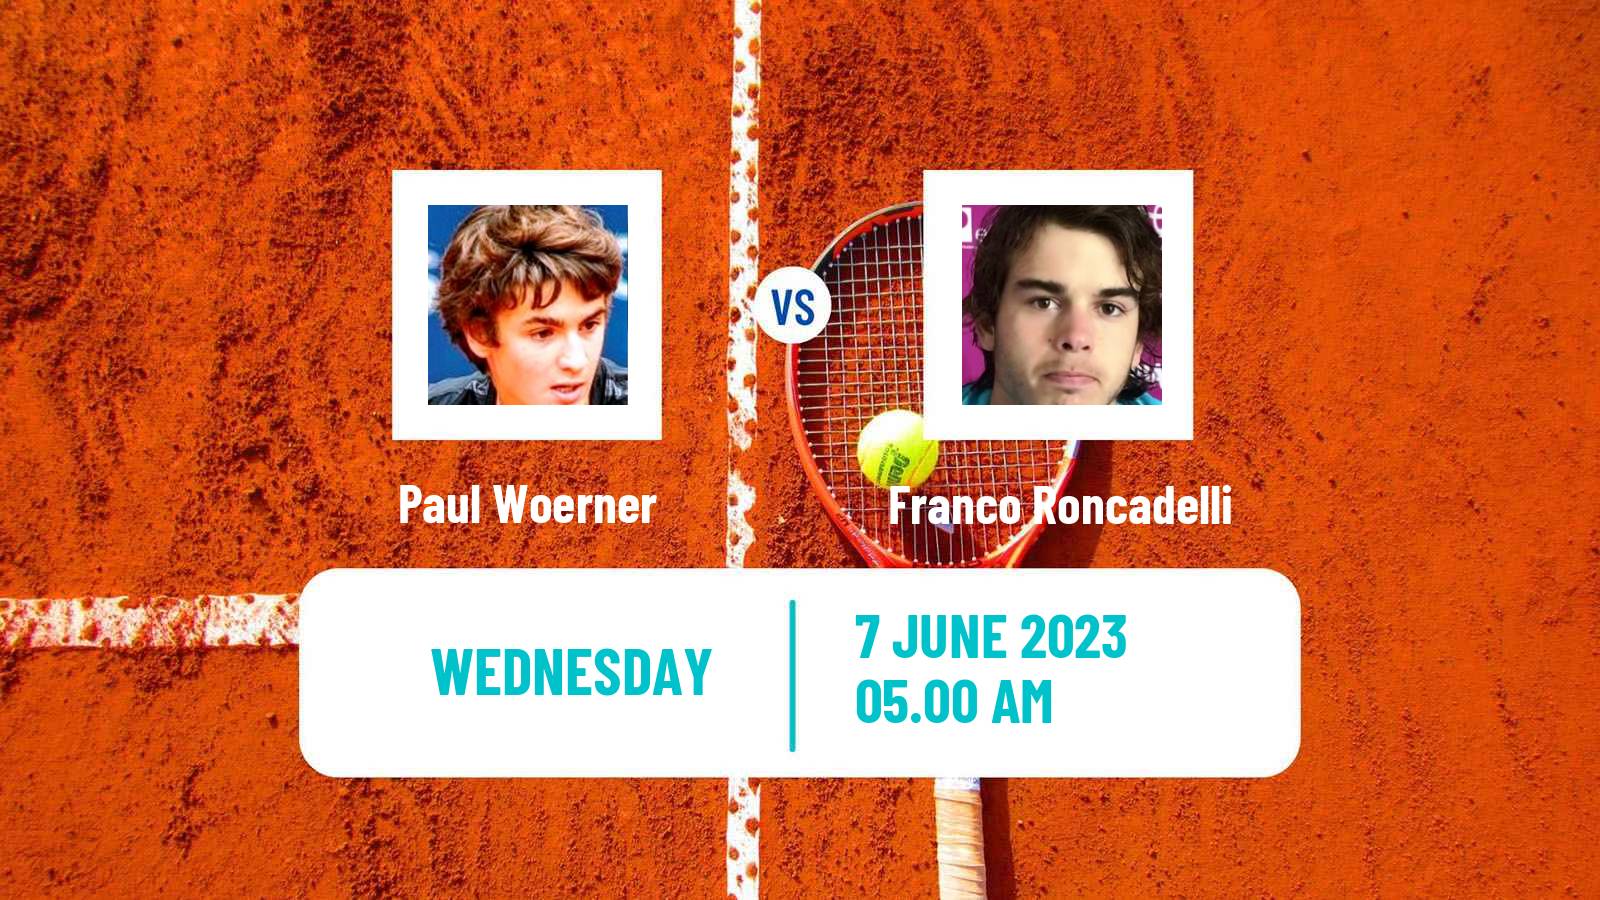 Tennis ITF M15 Tanger Men Paul Woerner - Franco Roncadelli